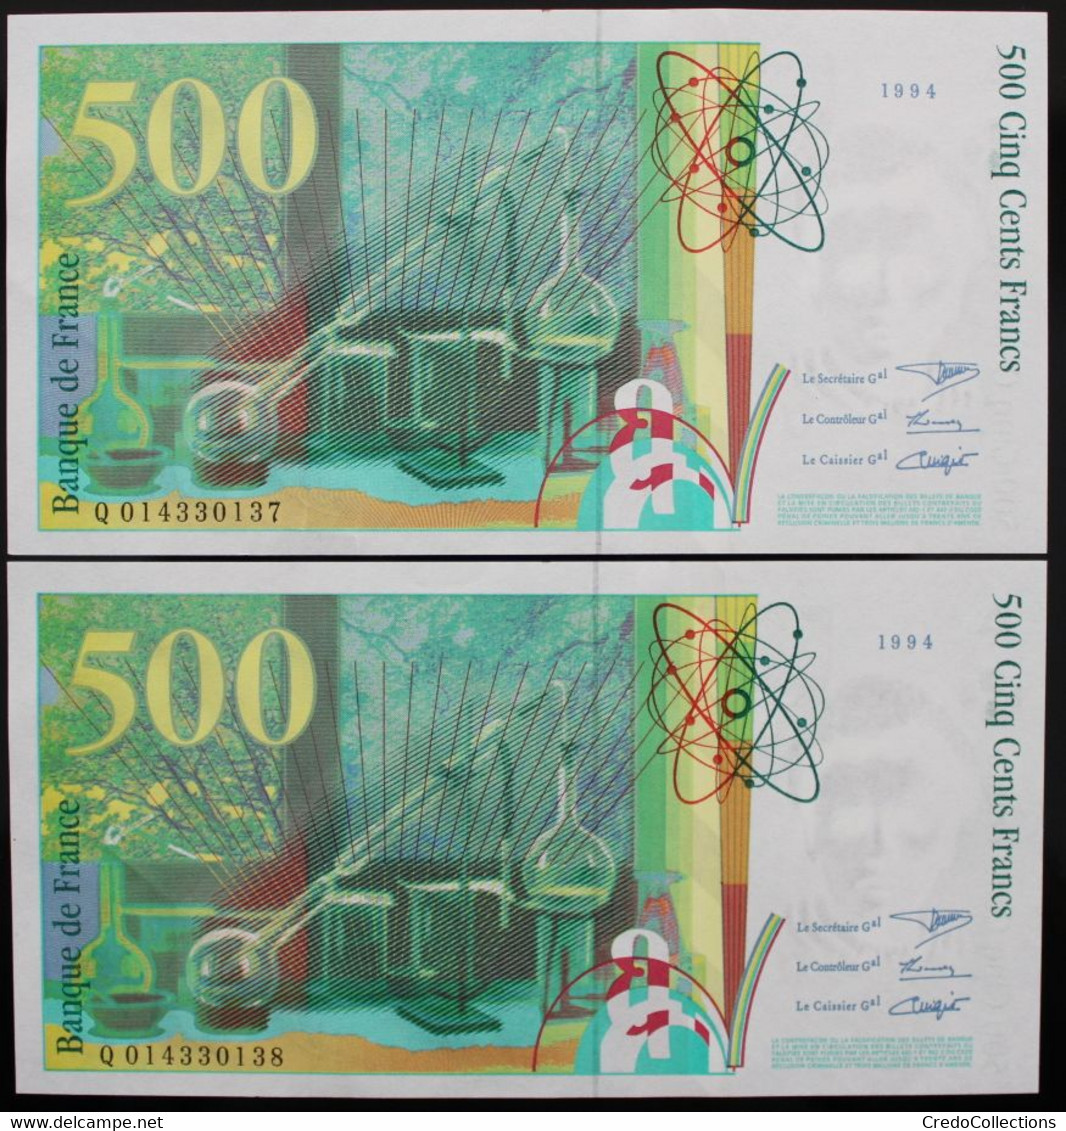 France - 500 Francs - 1994 - PICK 160a.1 / F76.1 - Pr. NEUF (2 Billets) - 500 F 1994-2000 ''Pierre En Marie Curie''